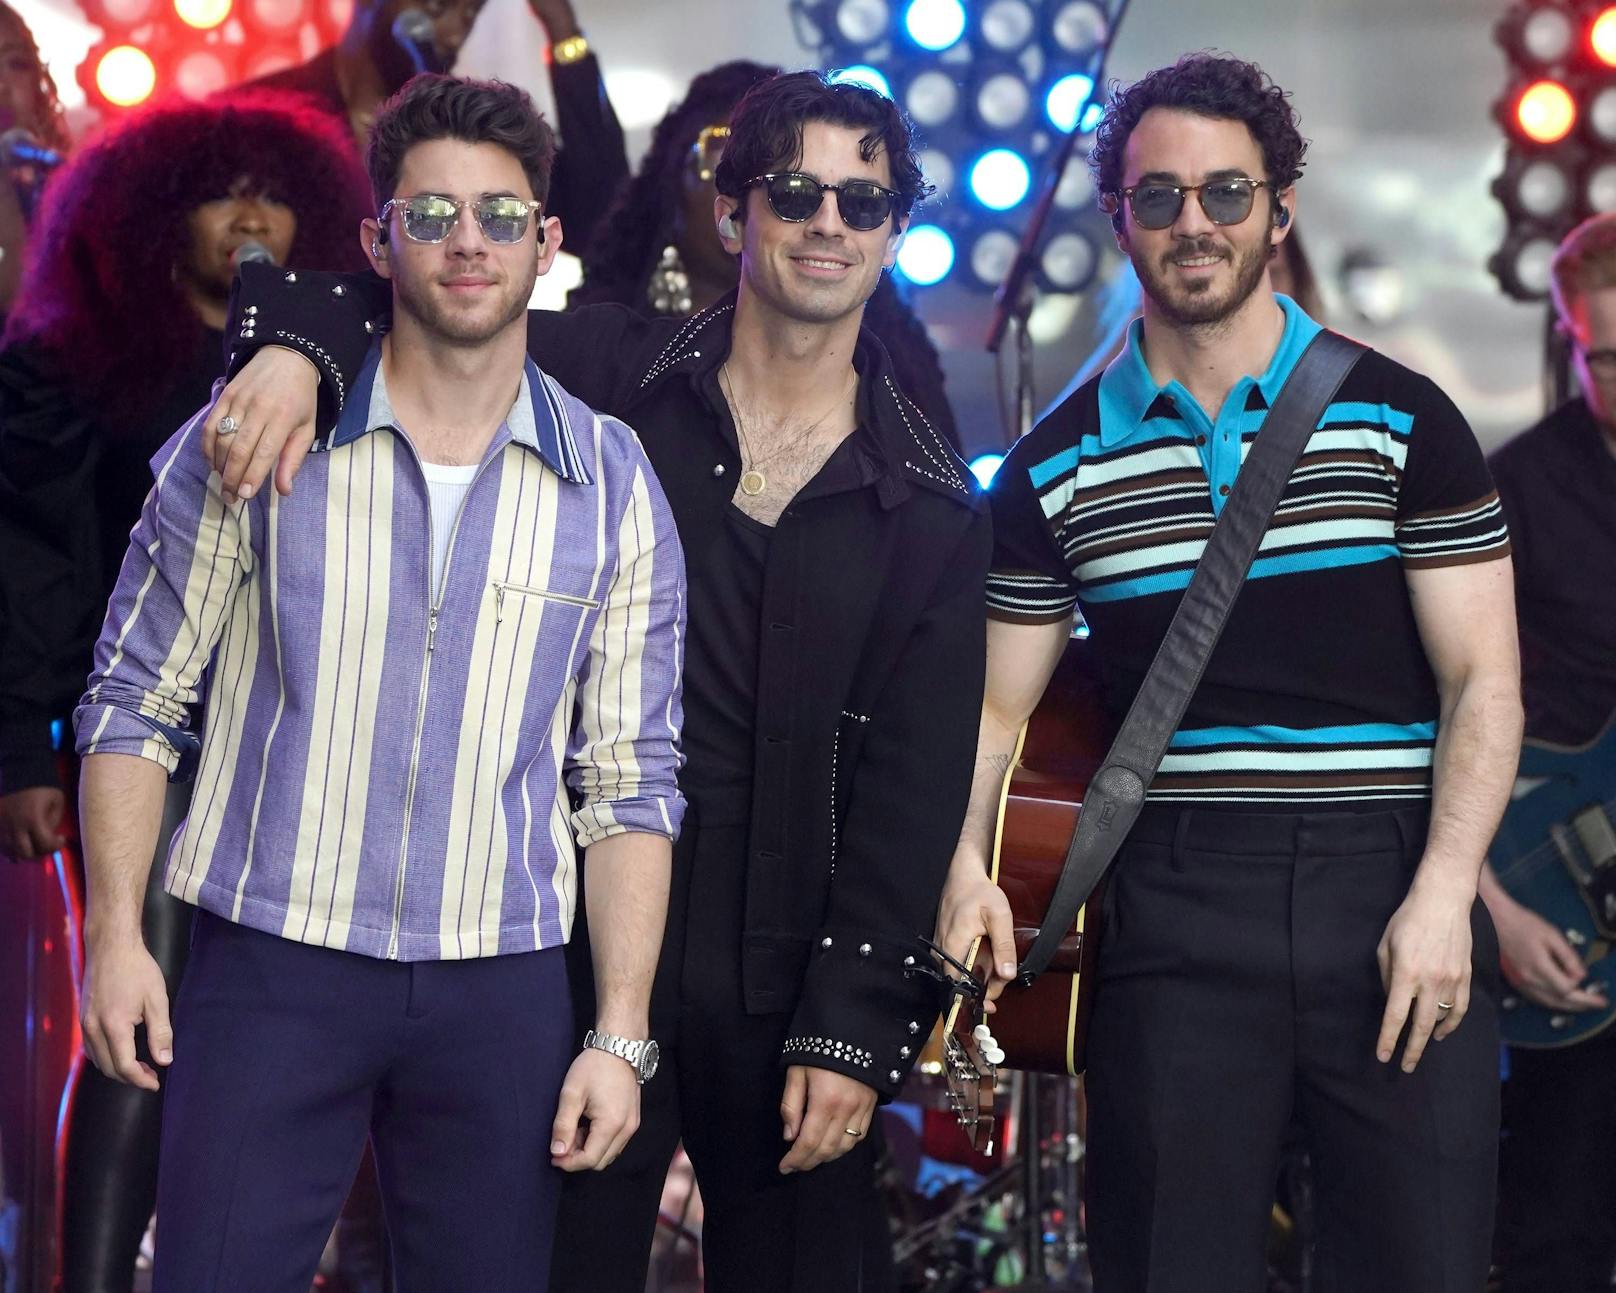 Großes Konzert! Jonas Brothers kommen endlich nach Wien